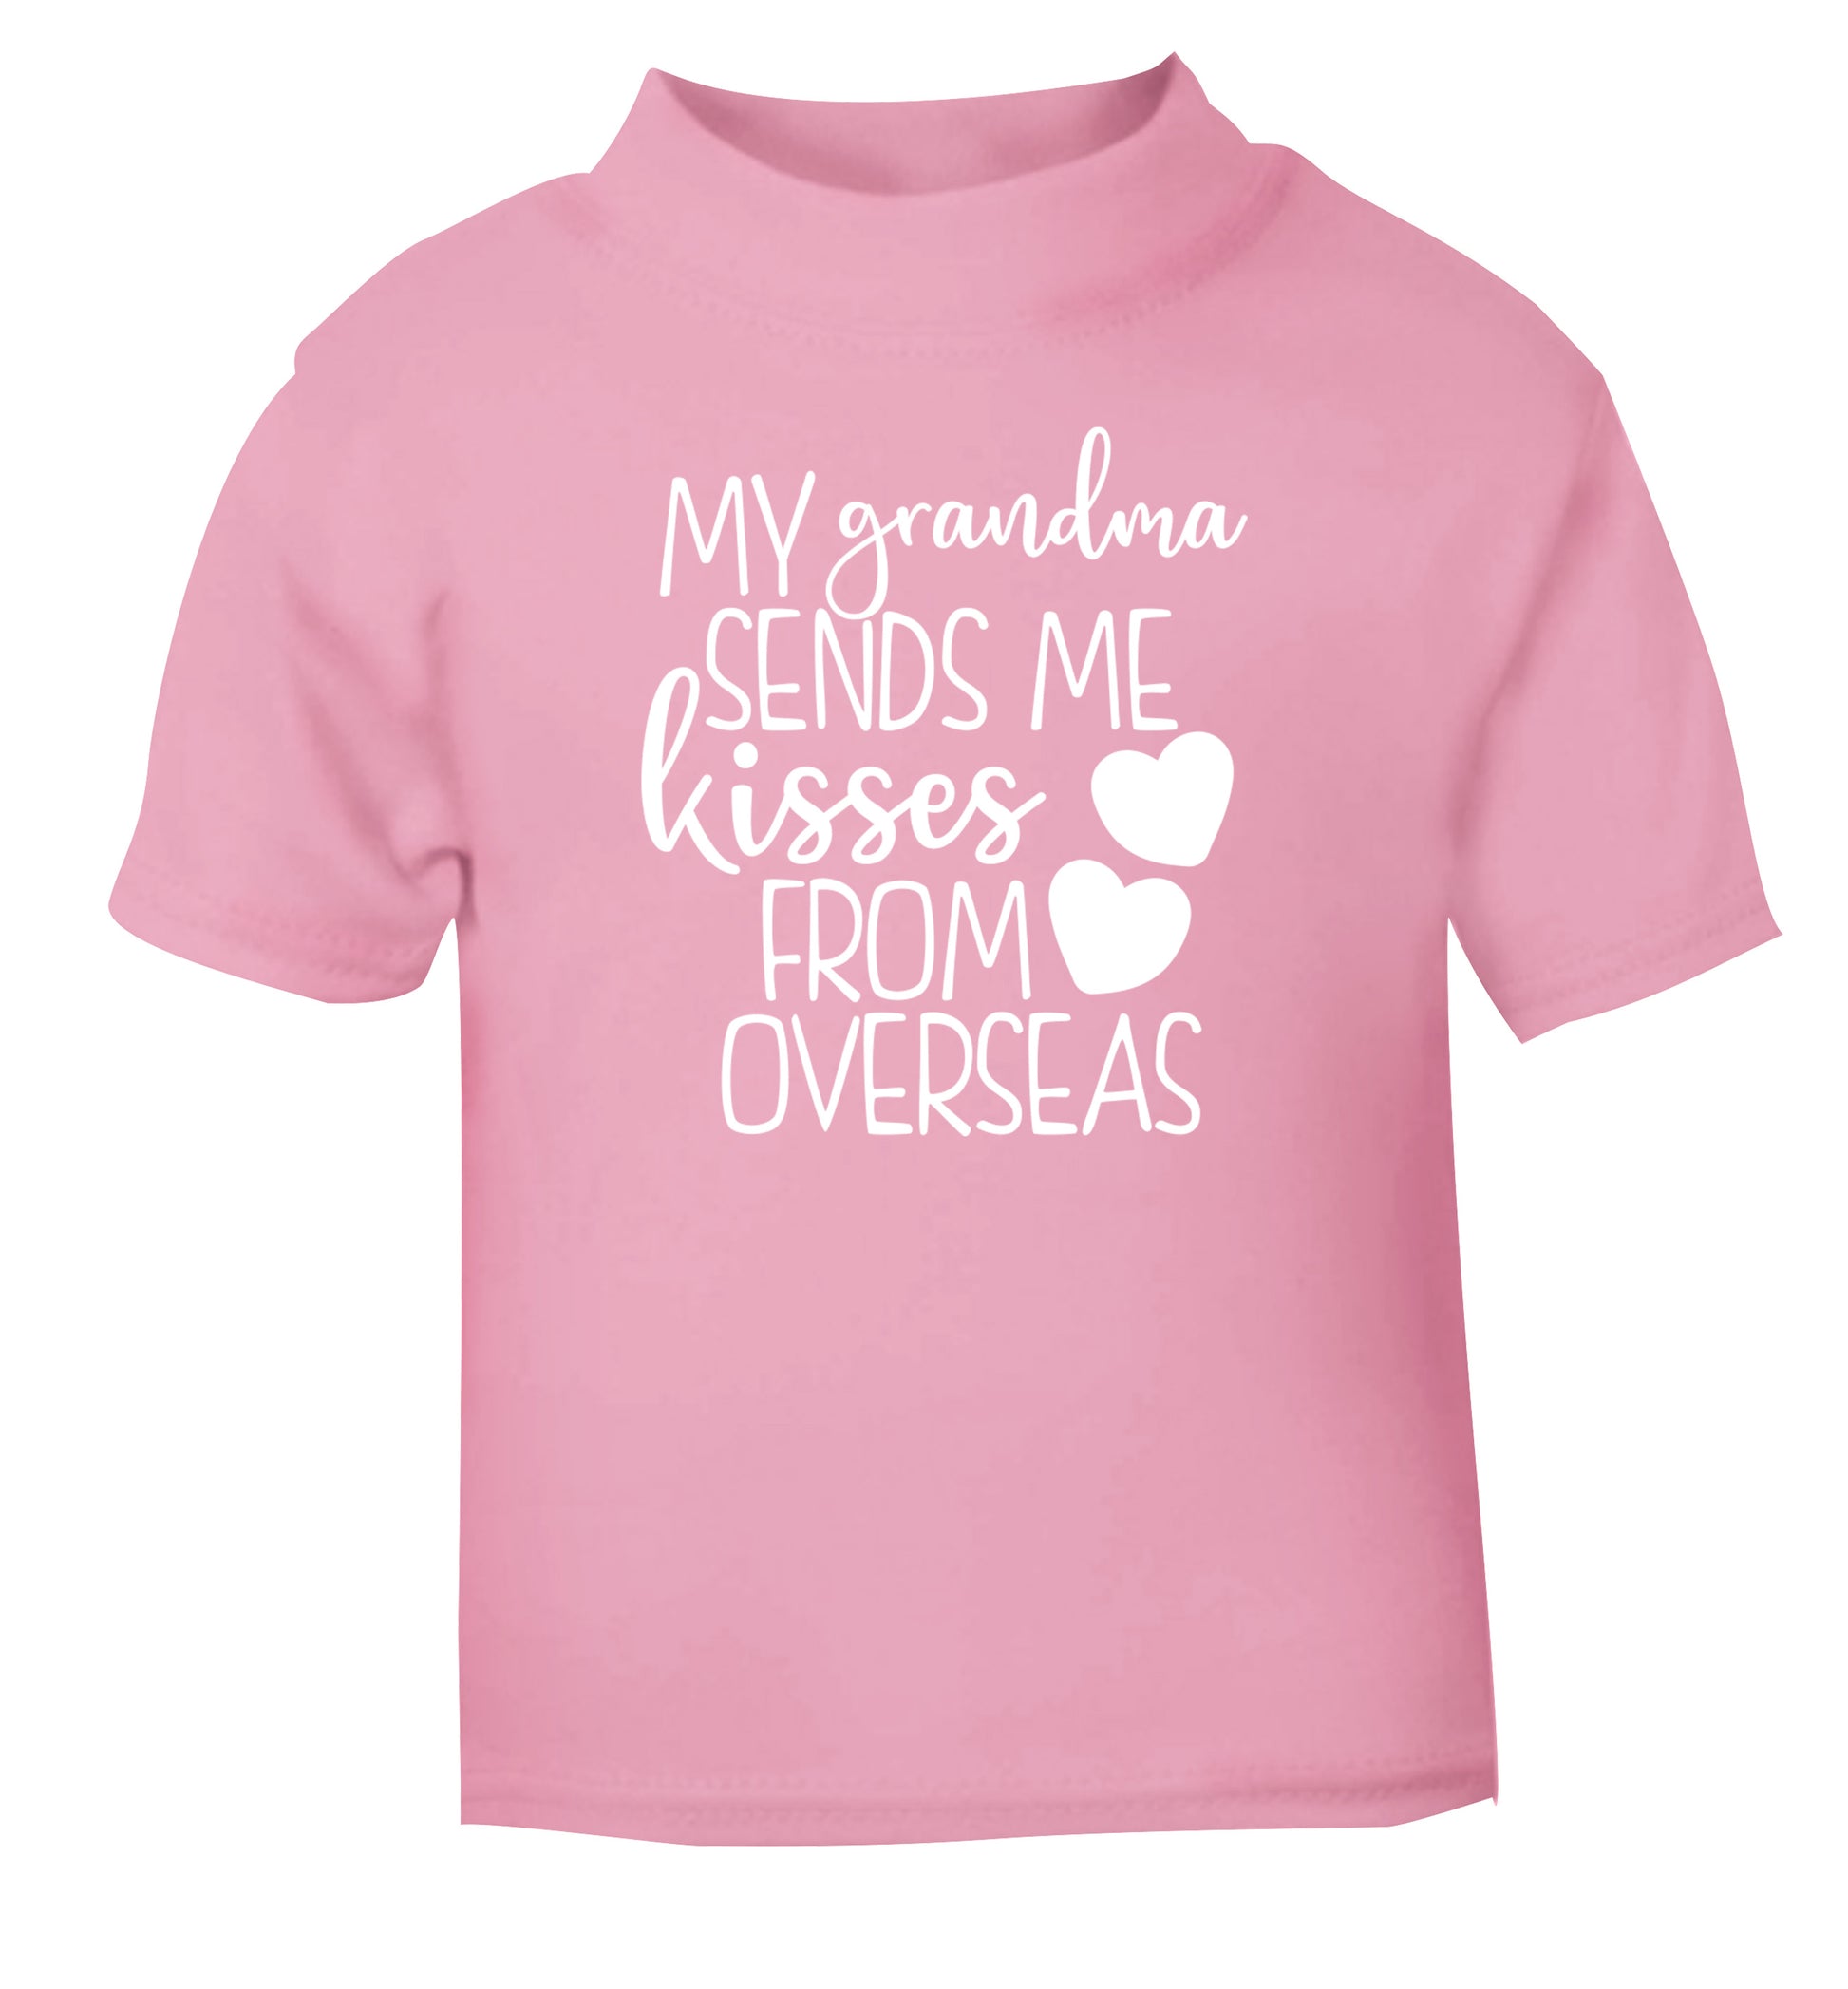 My Grandma sends me kisses from overseas light pink Baby Toddler Tshirt 2 Years